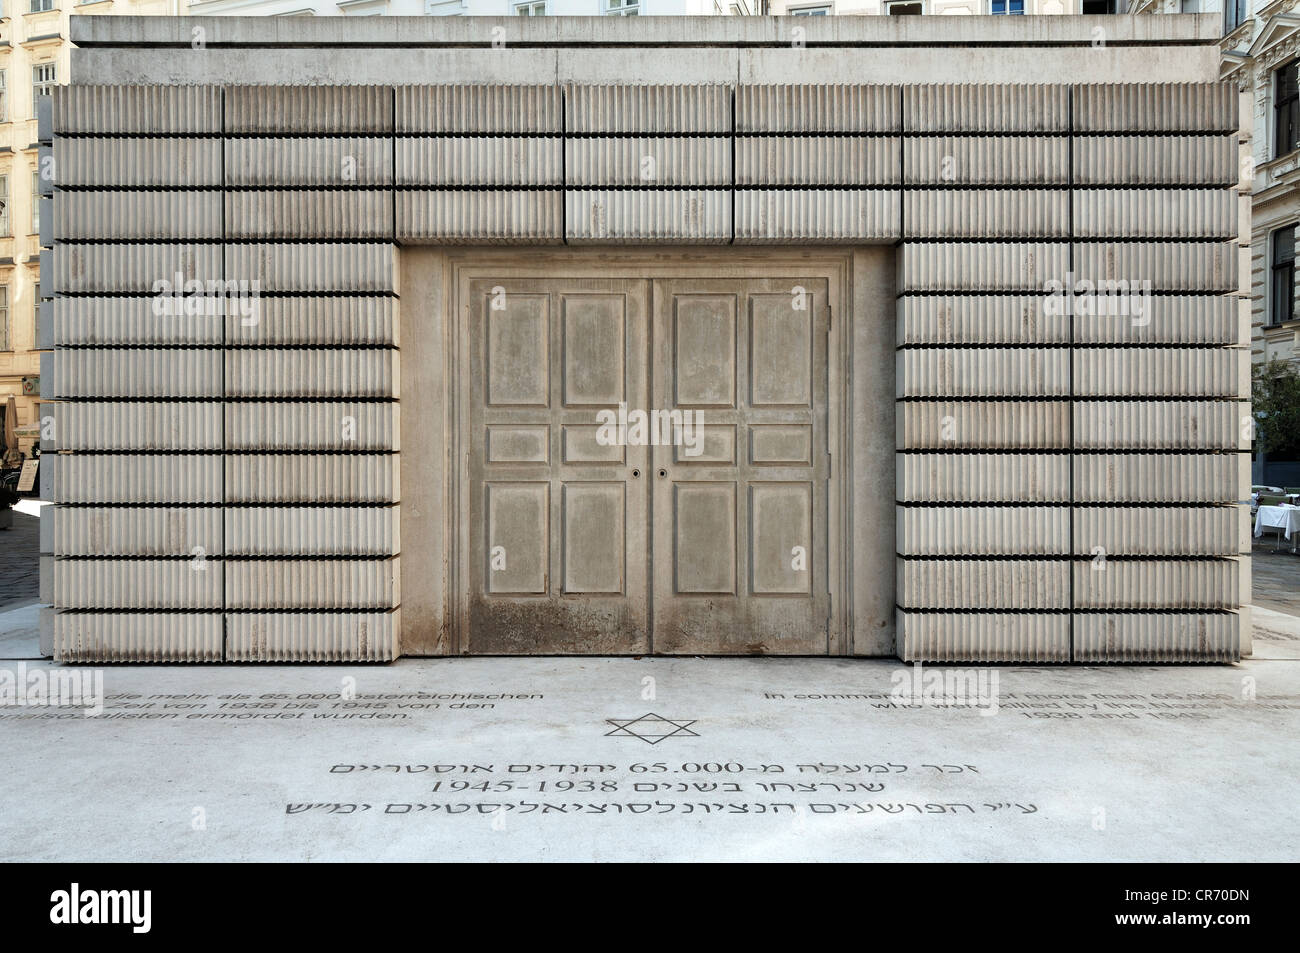 Holocaust memorial by the English artist Rachel Whiteread, 2009, Judenplatz, Vienna, Austria, Europe Stock Photo